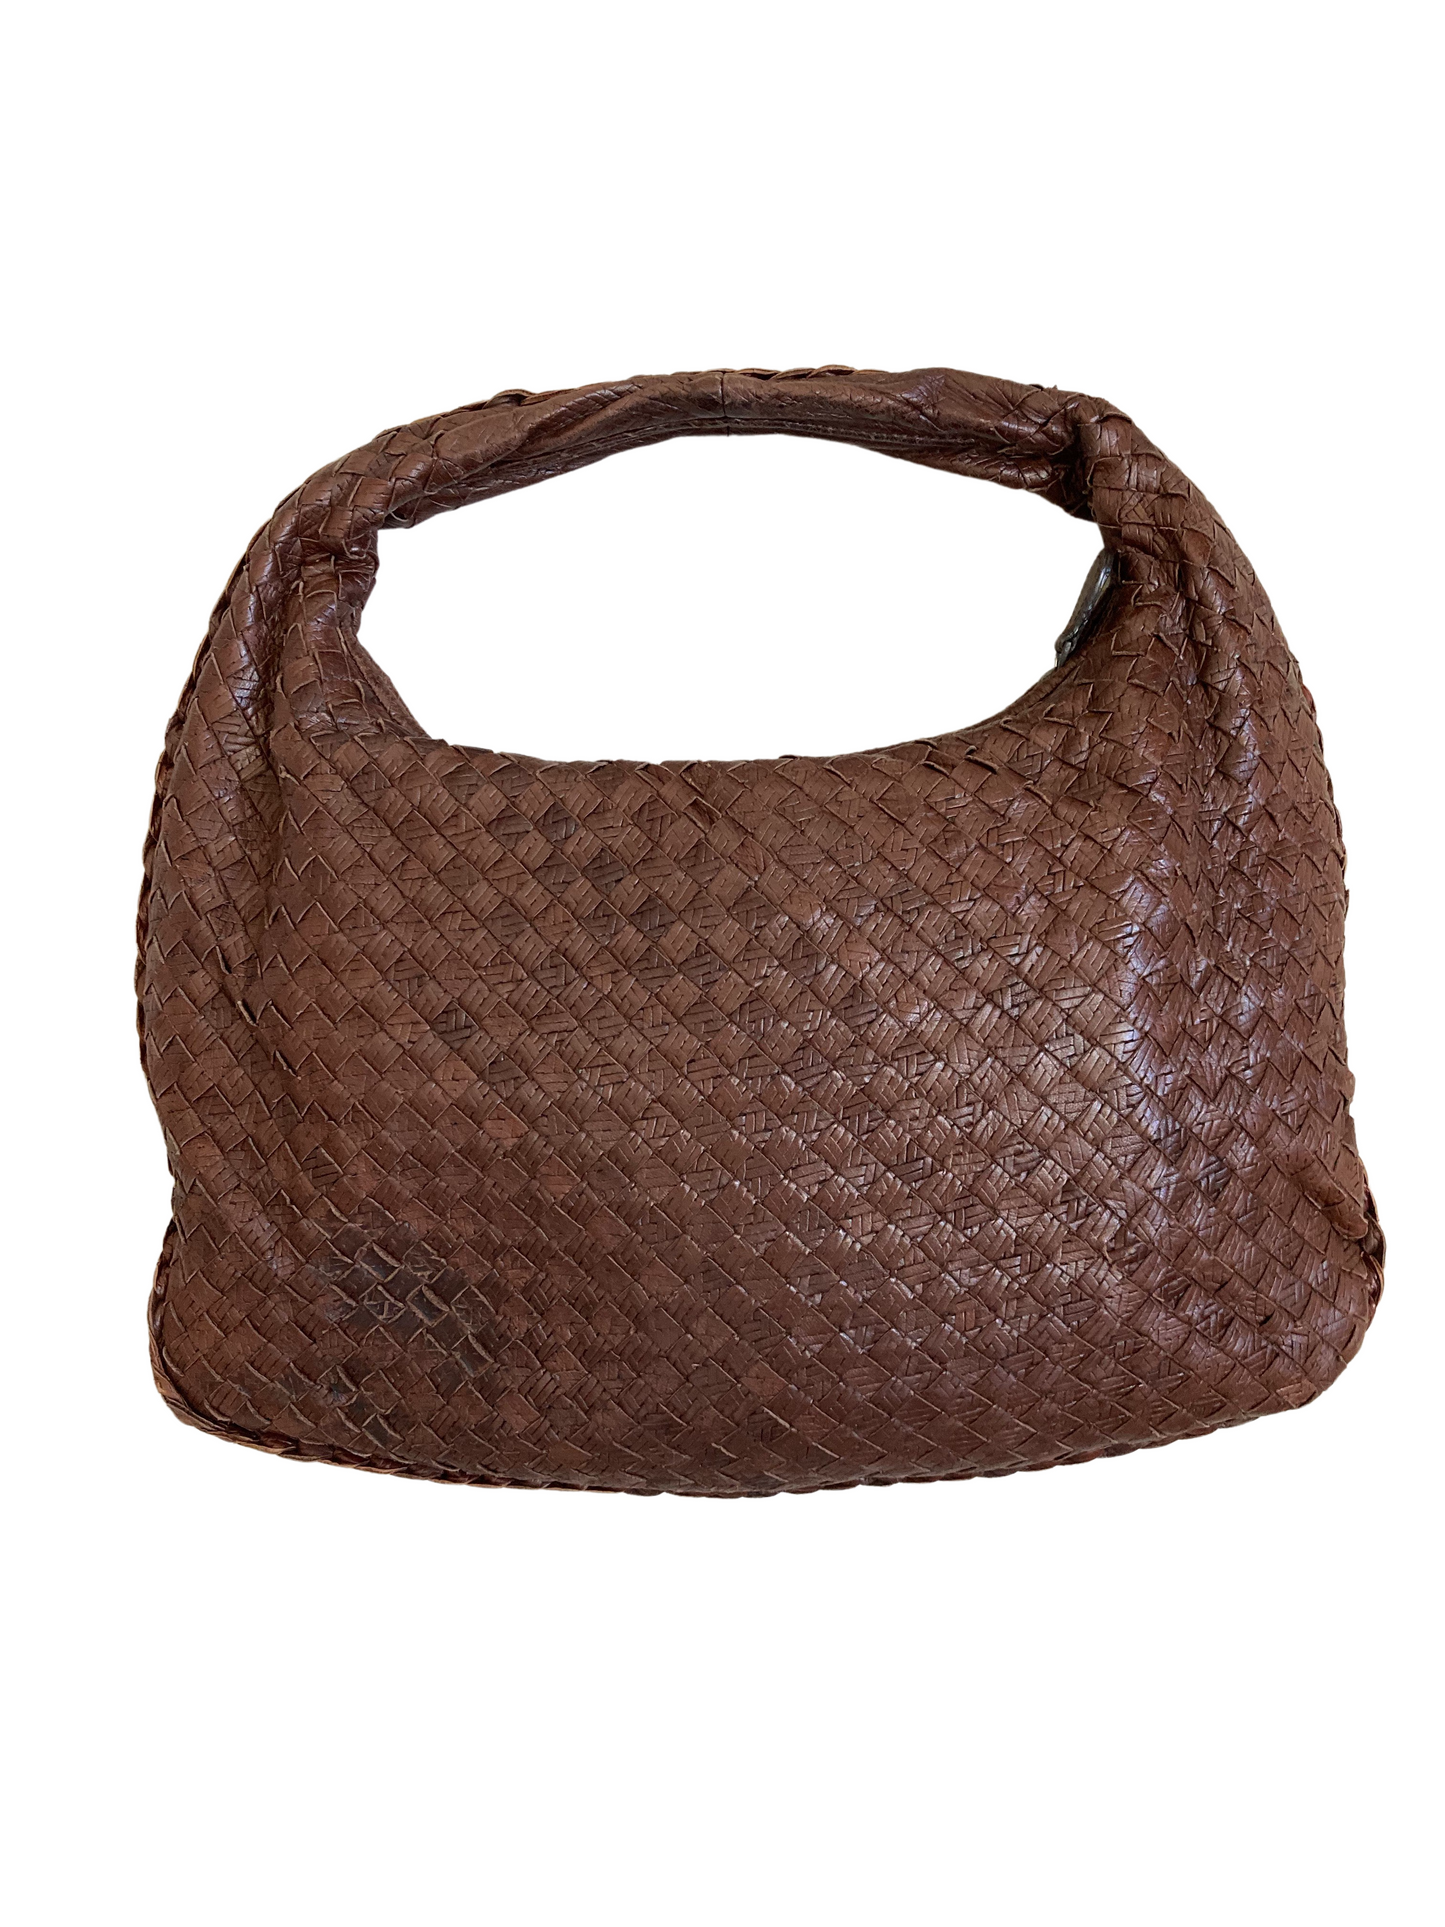 Bottega Veneta Brown Leather Medium Hobo Bag